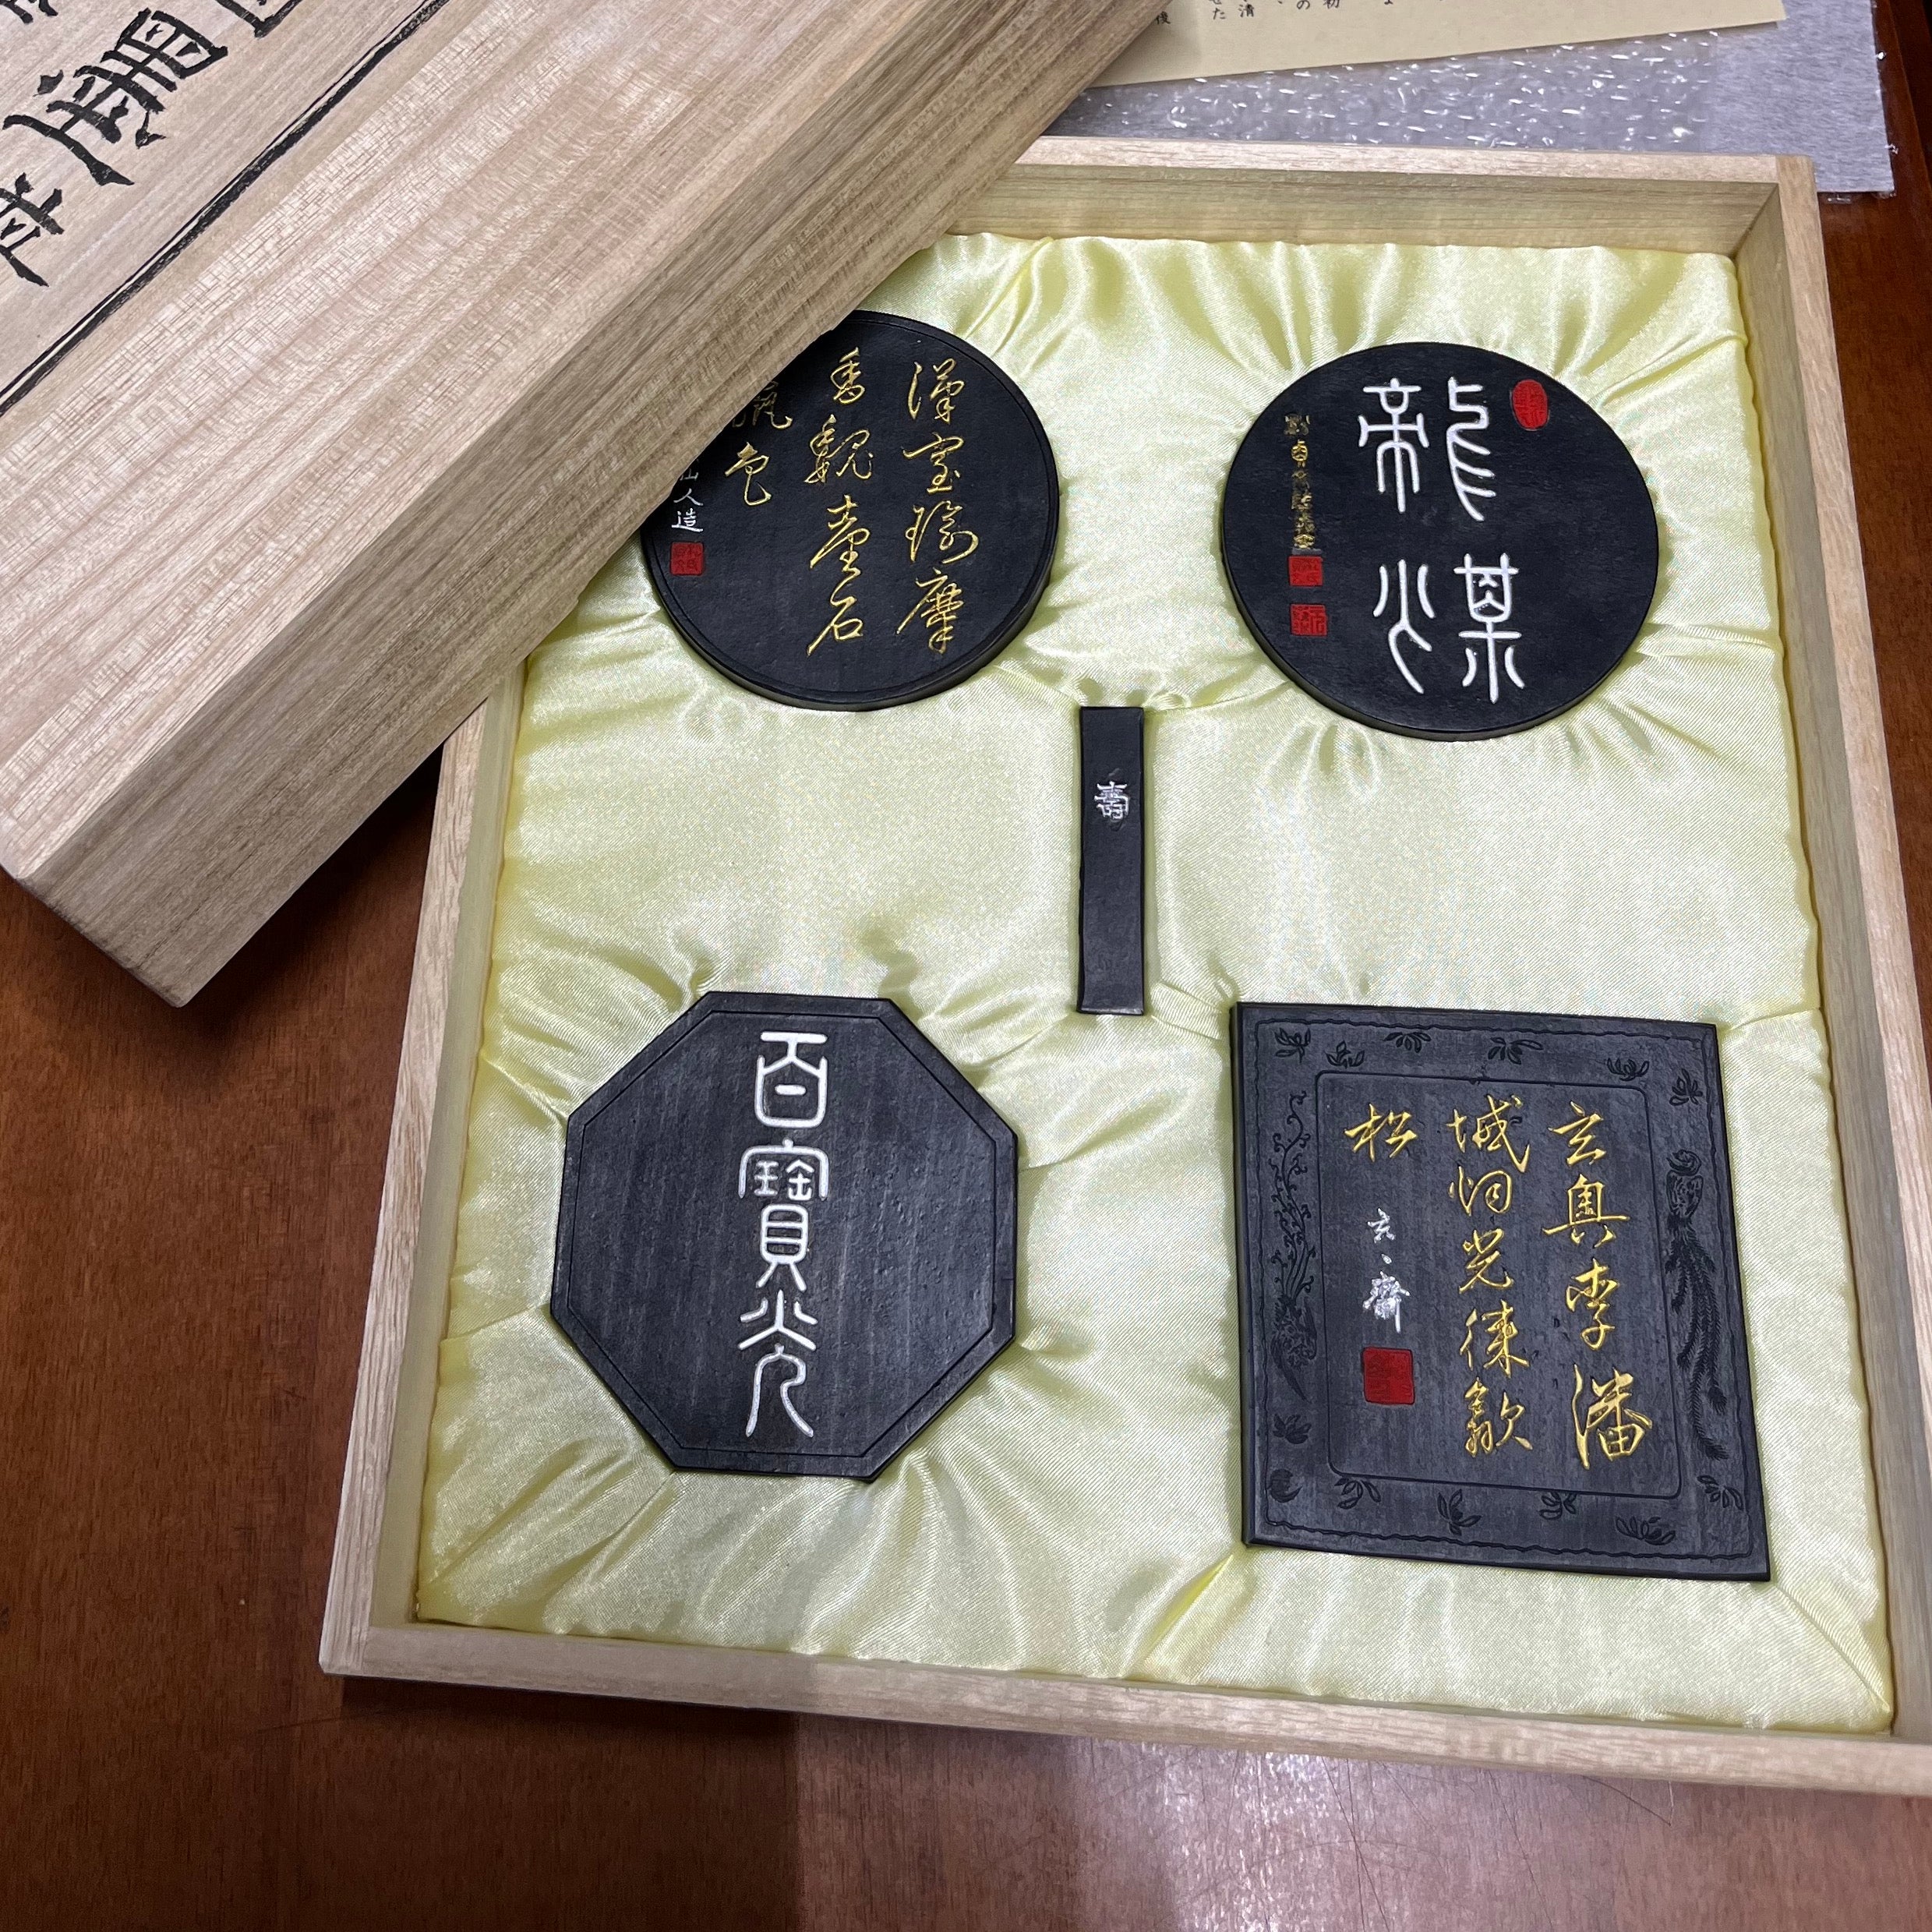 Bokufu 1993 - Kobaien's special sumi inkstick year selection ( 古梅園墨譜1993 / 平成5 )